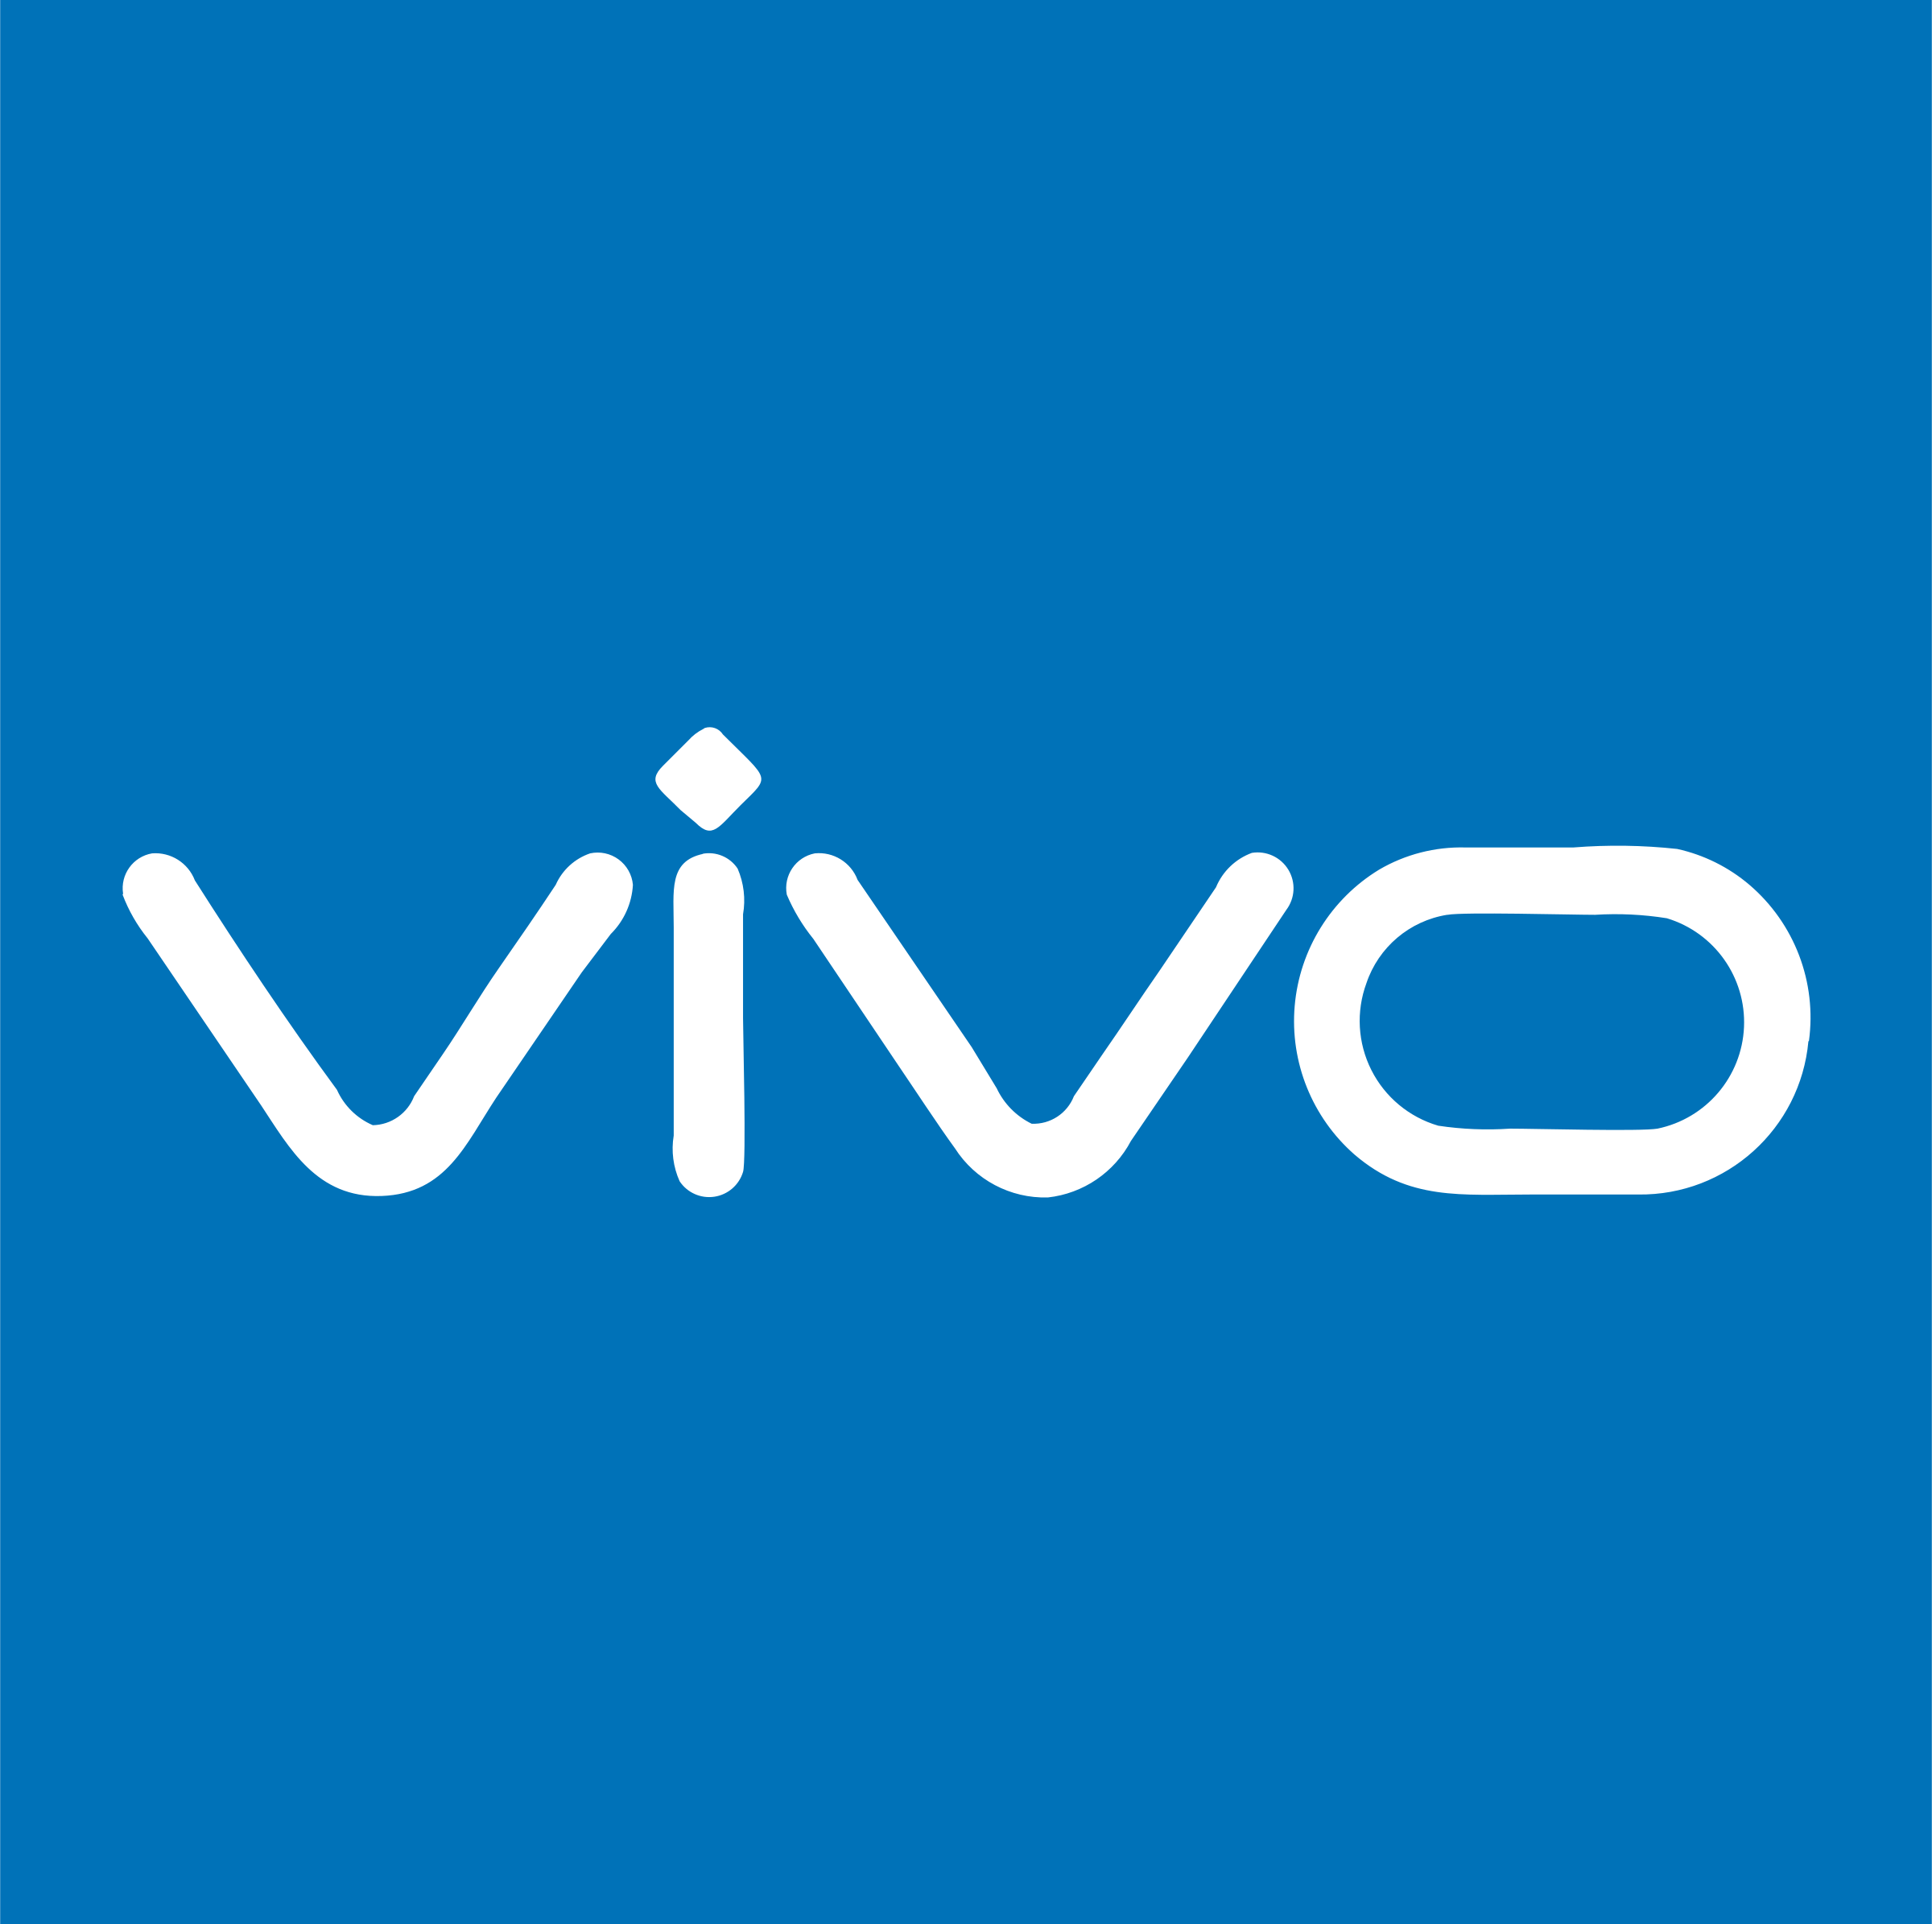 Vivo Logo Png Transparent Vivo Logo Png Images Pluspng Sexiz Pix